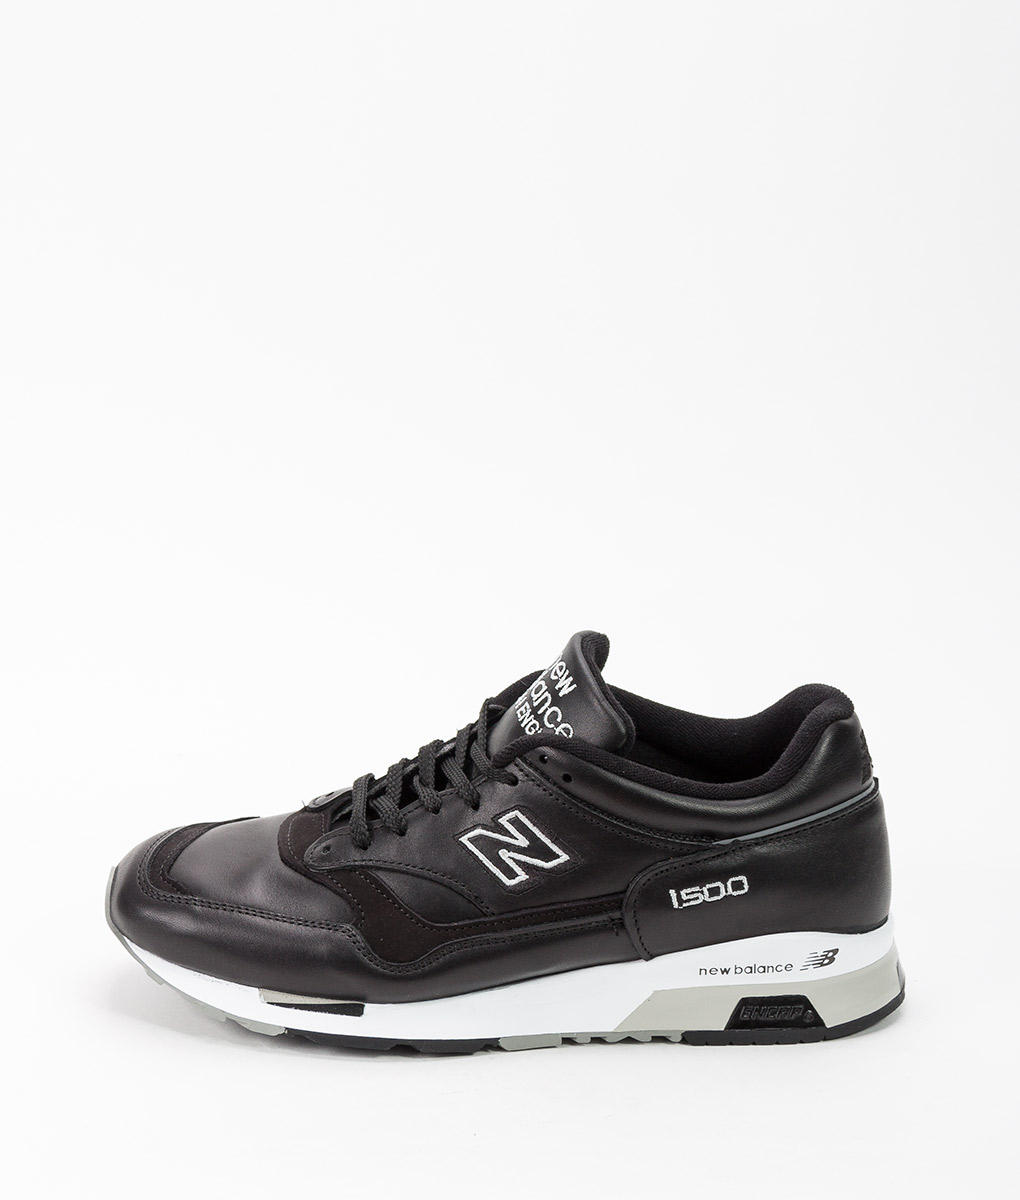 NEW BALANCE Men Running Shoes M1500 BK, Black 199.99 – T6/8